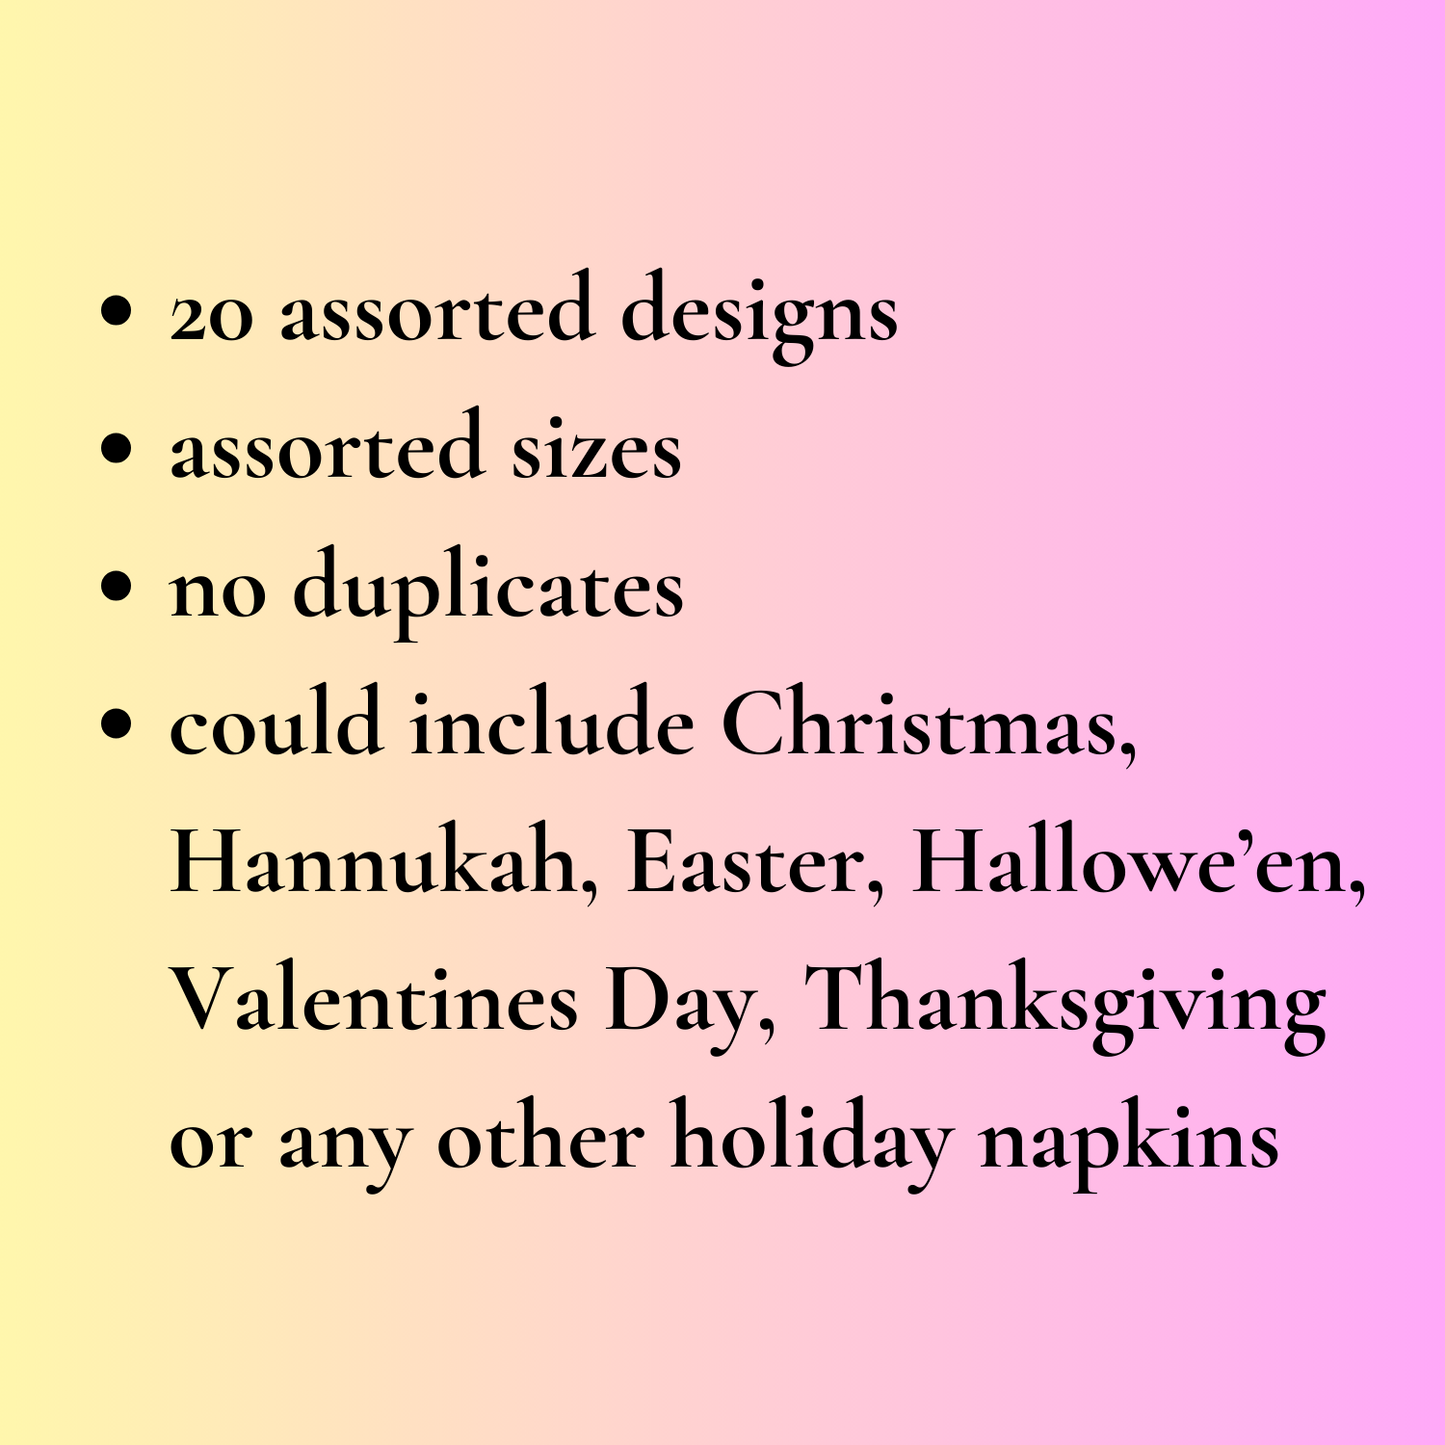 Decoupage Napkin Surprise Pack- Holidays